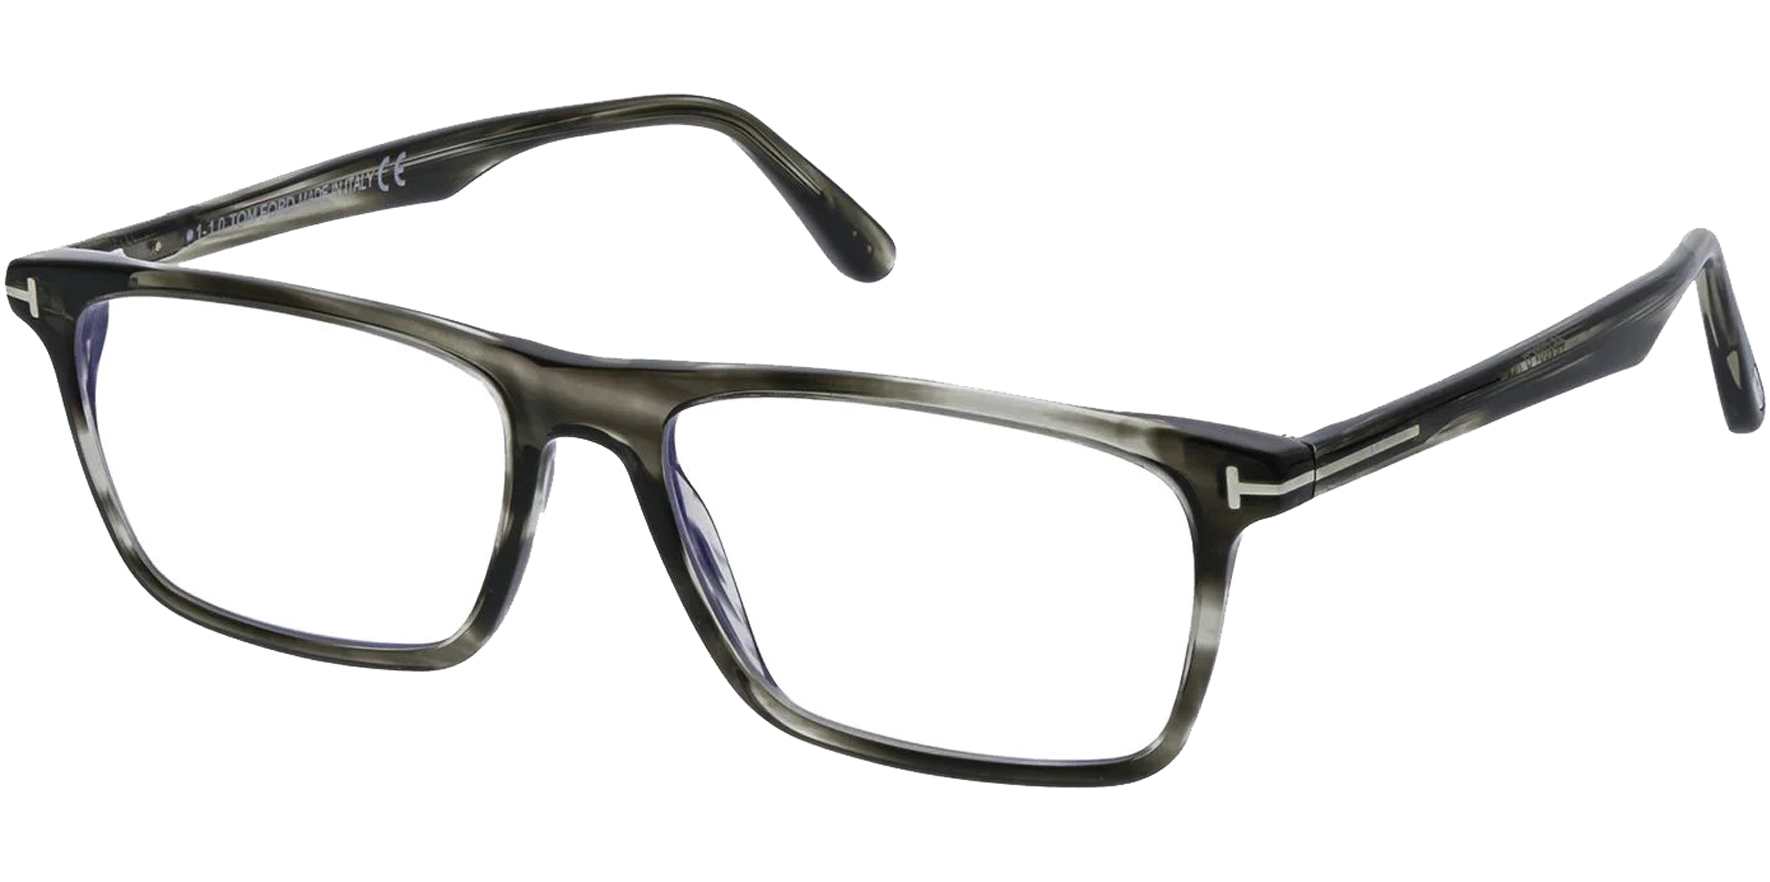 Tom Ford Blue Block Classic Rectangle Eyeglass Frames